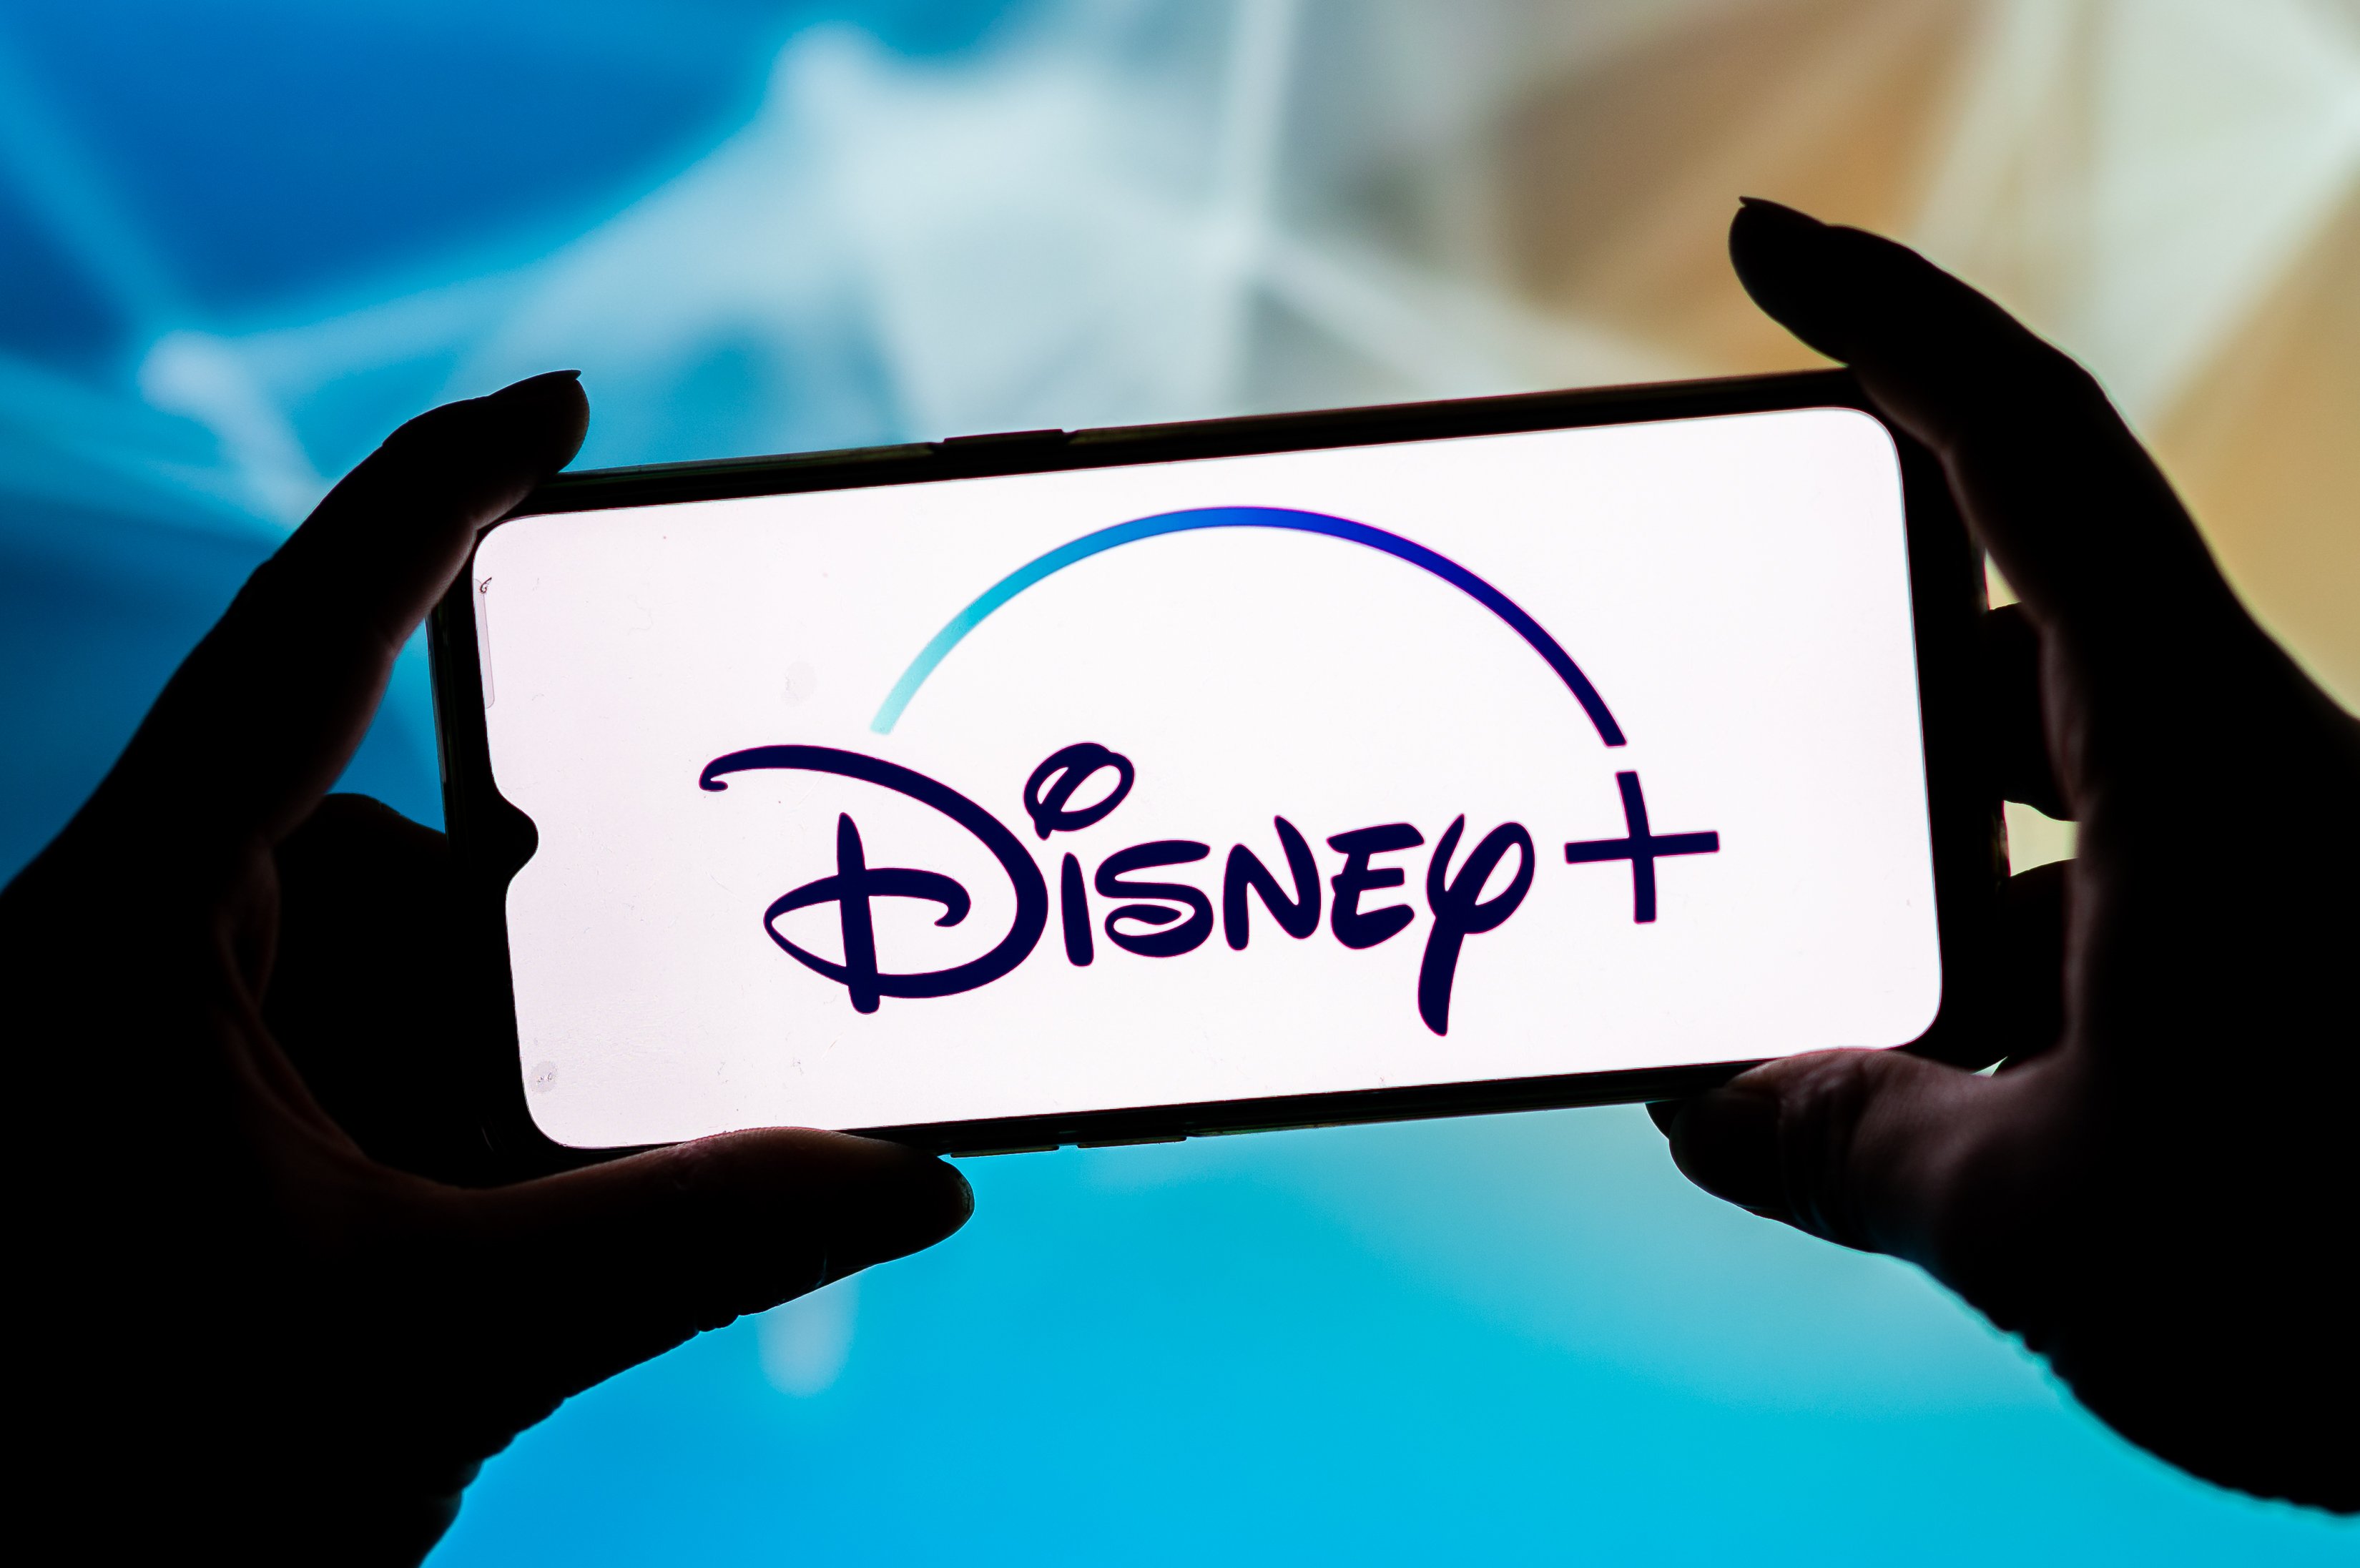 Disney+ logo shines on a phone screen, home of several Disney+ halloween movies